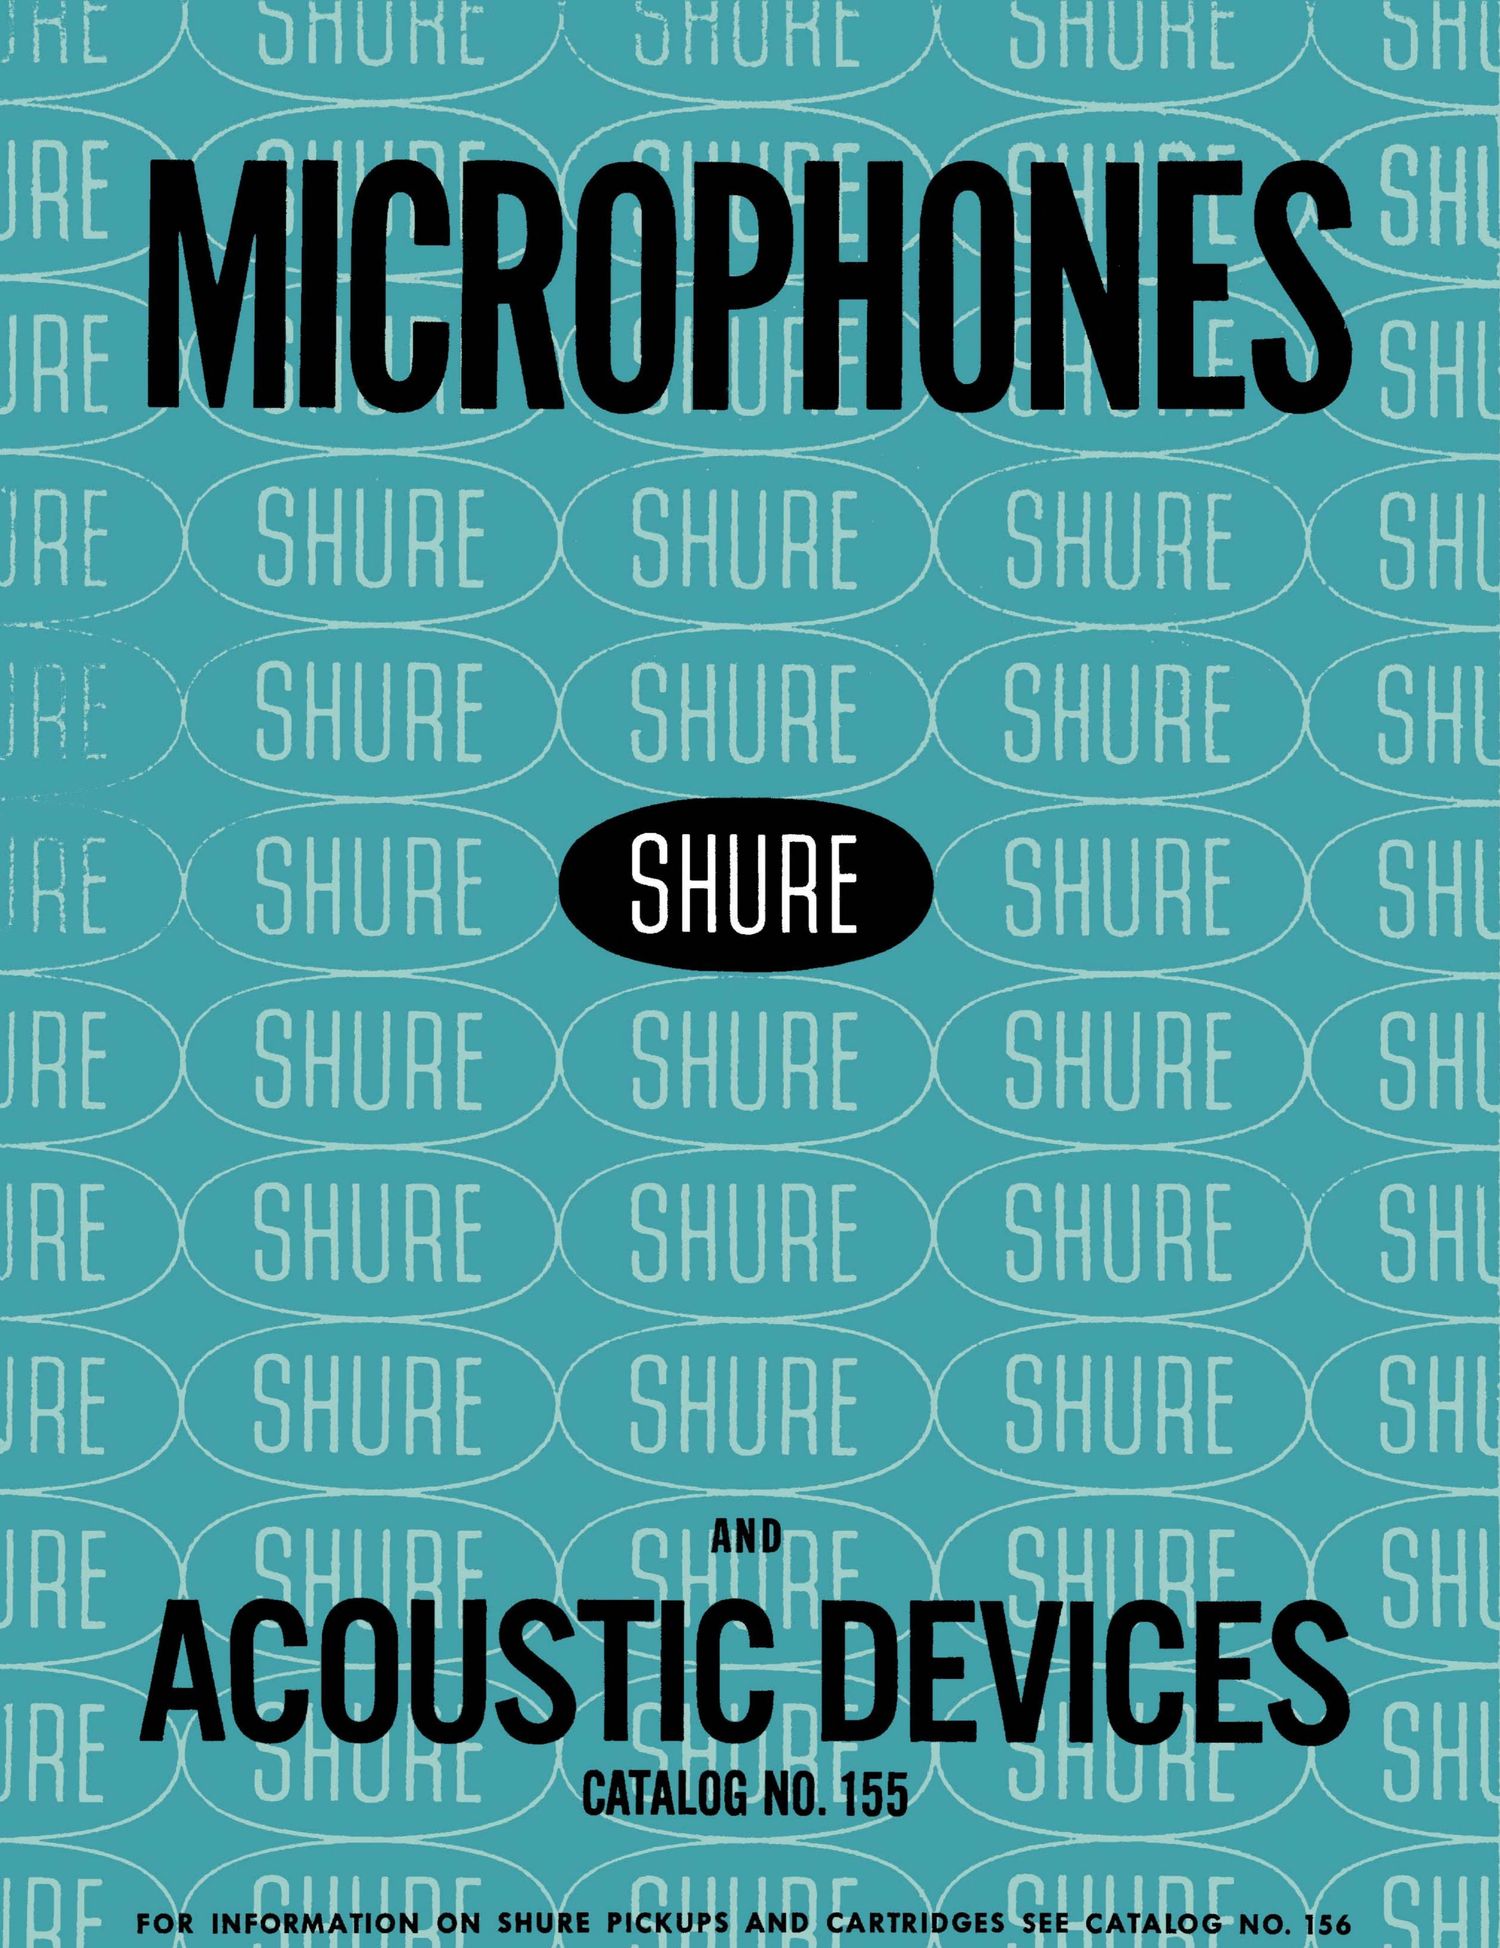 shure 1942 catalogue microphones